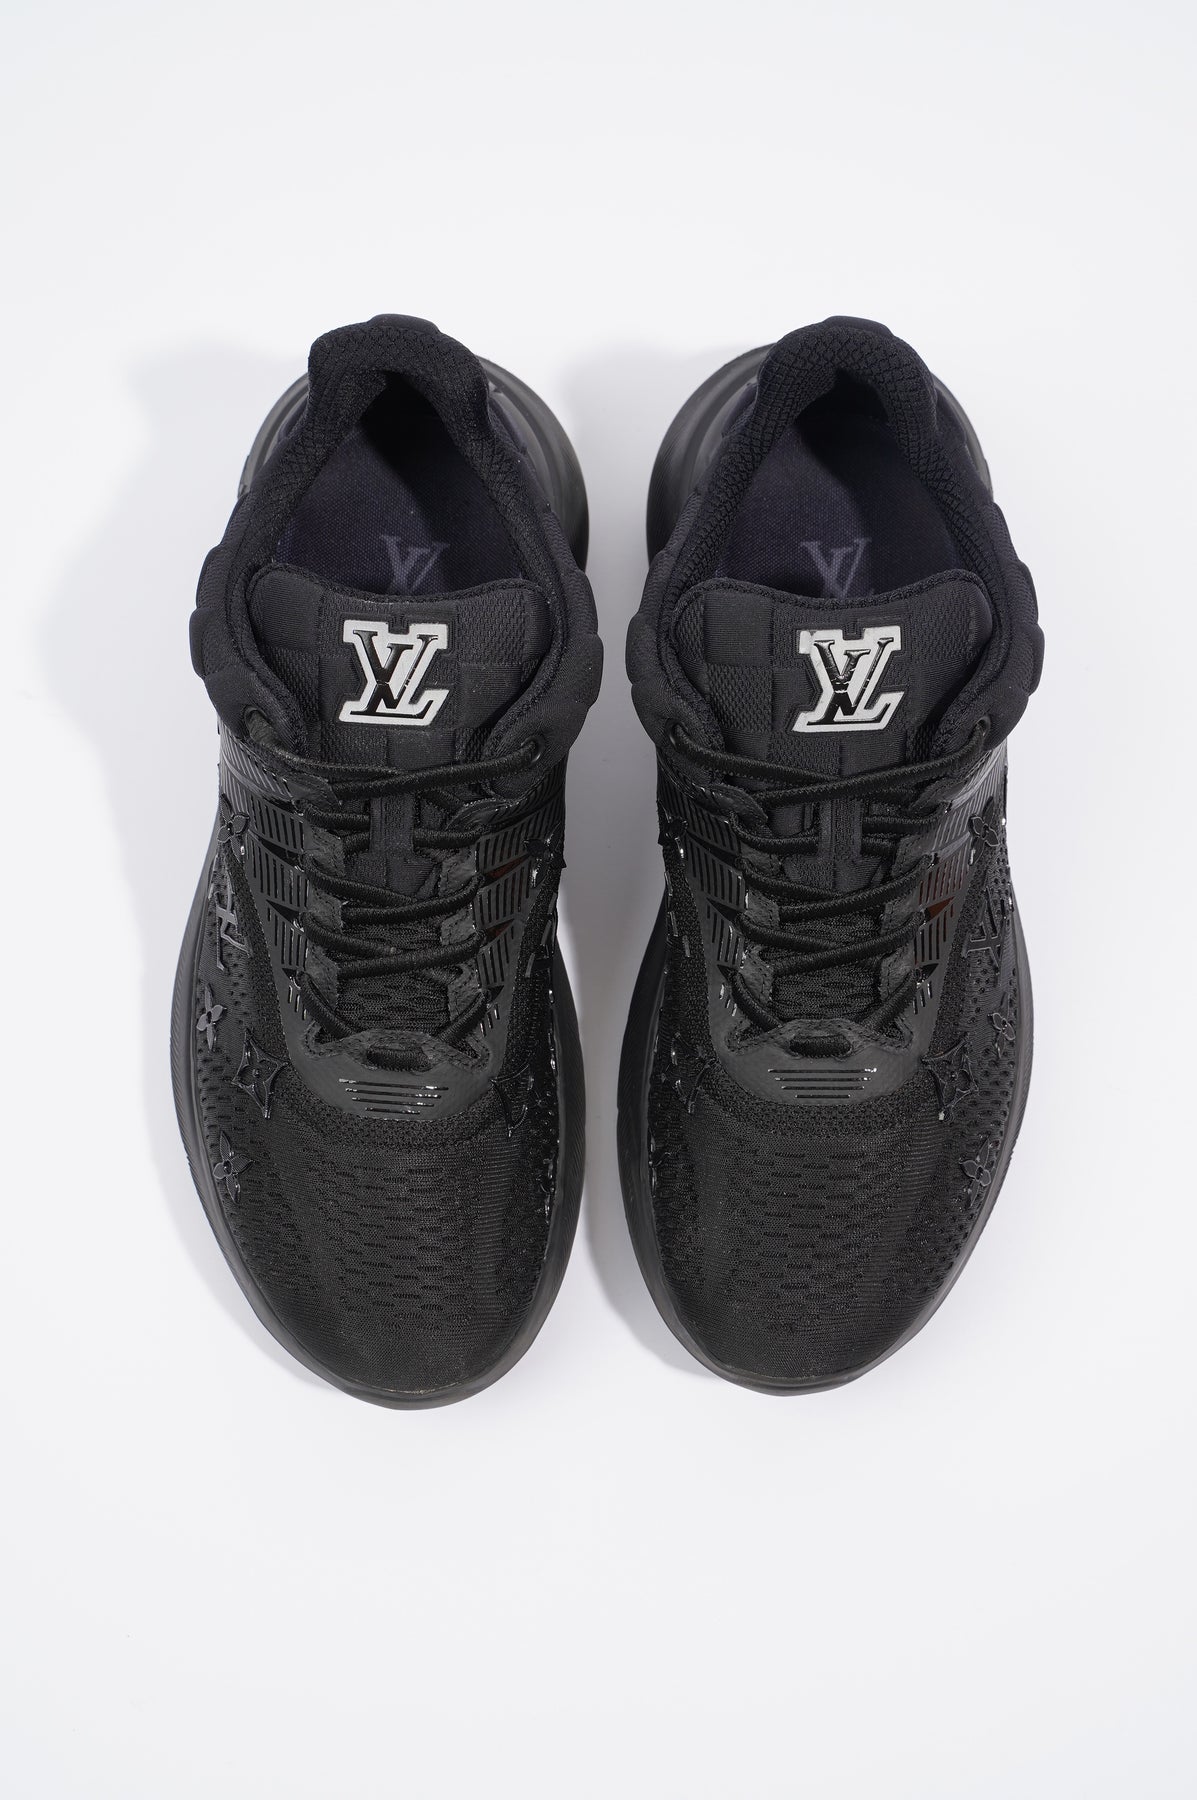 Louis Vuitton VNR Runners Sneakers UK6 EU40 RRP